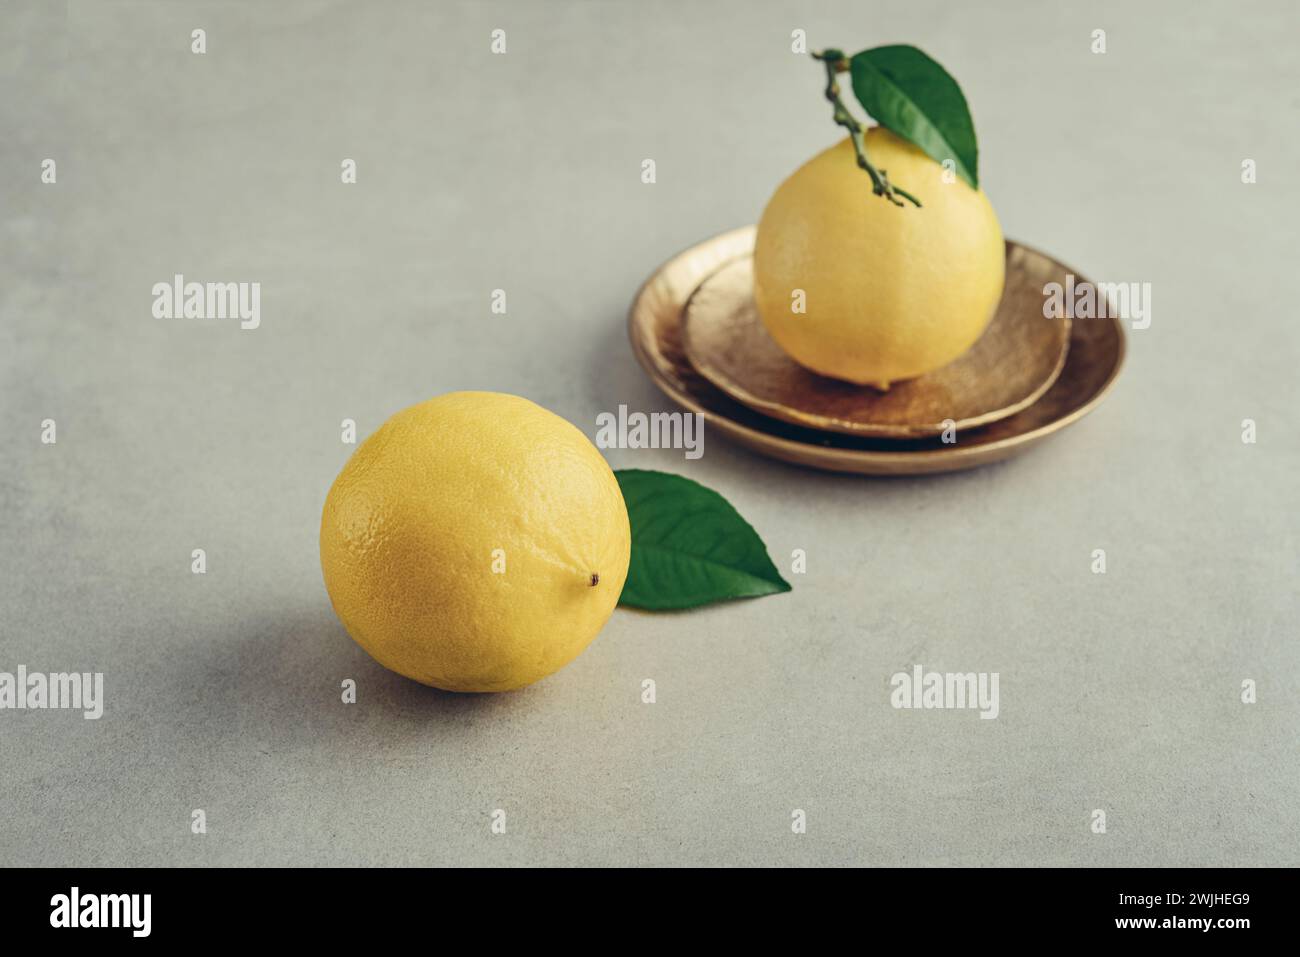 Fresh ripe bergamot orange fruits, fragrant citrus used in earl grey tea, medicine and spa treatments, on light background Stock Photo